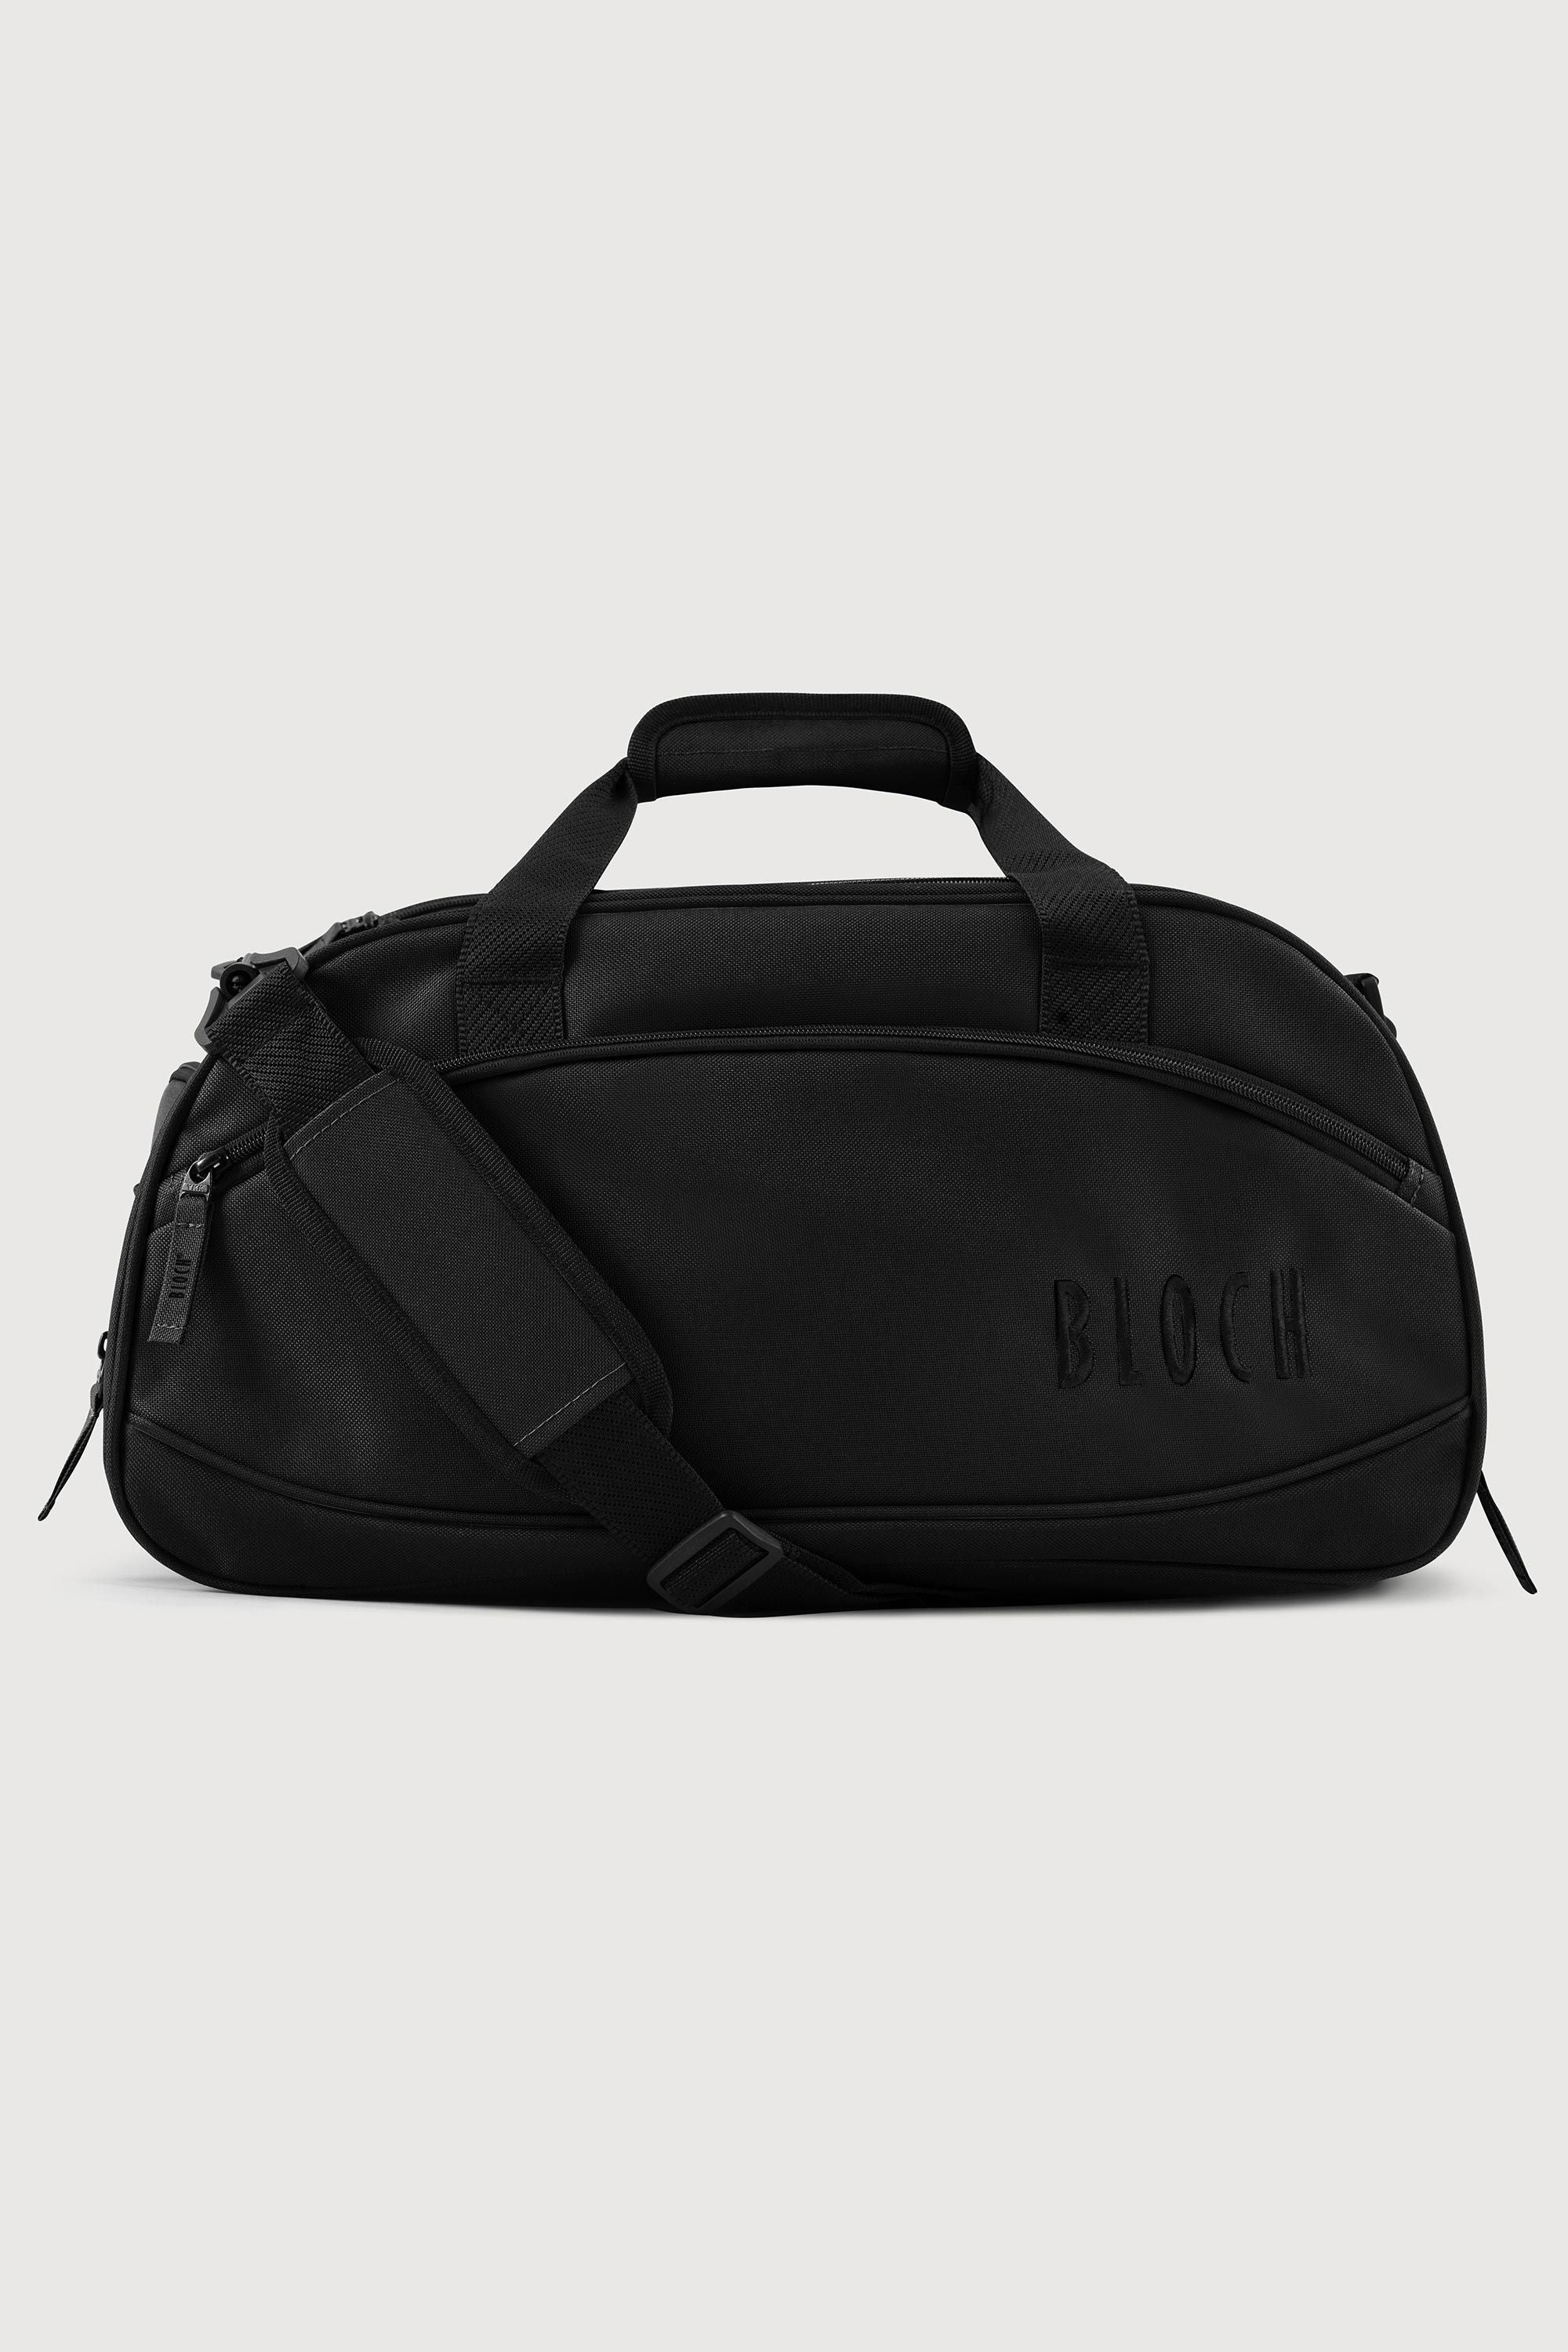 Bloch Two Tone Dance Bag, Black Nylon